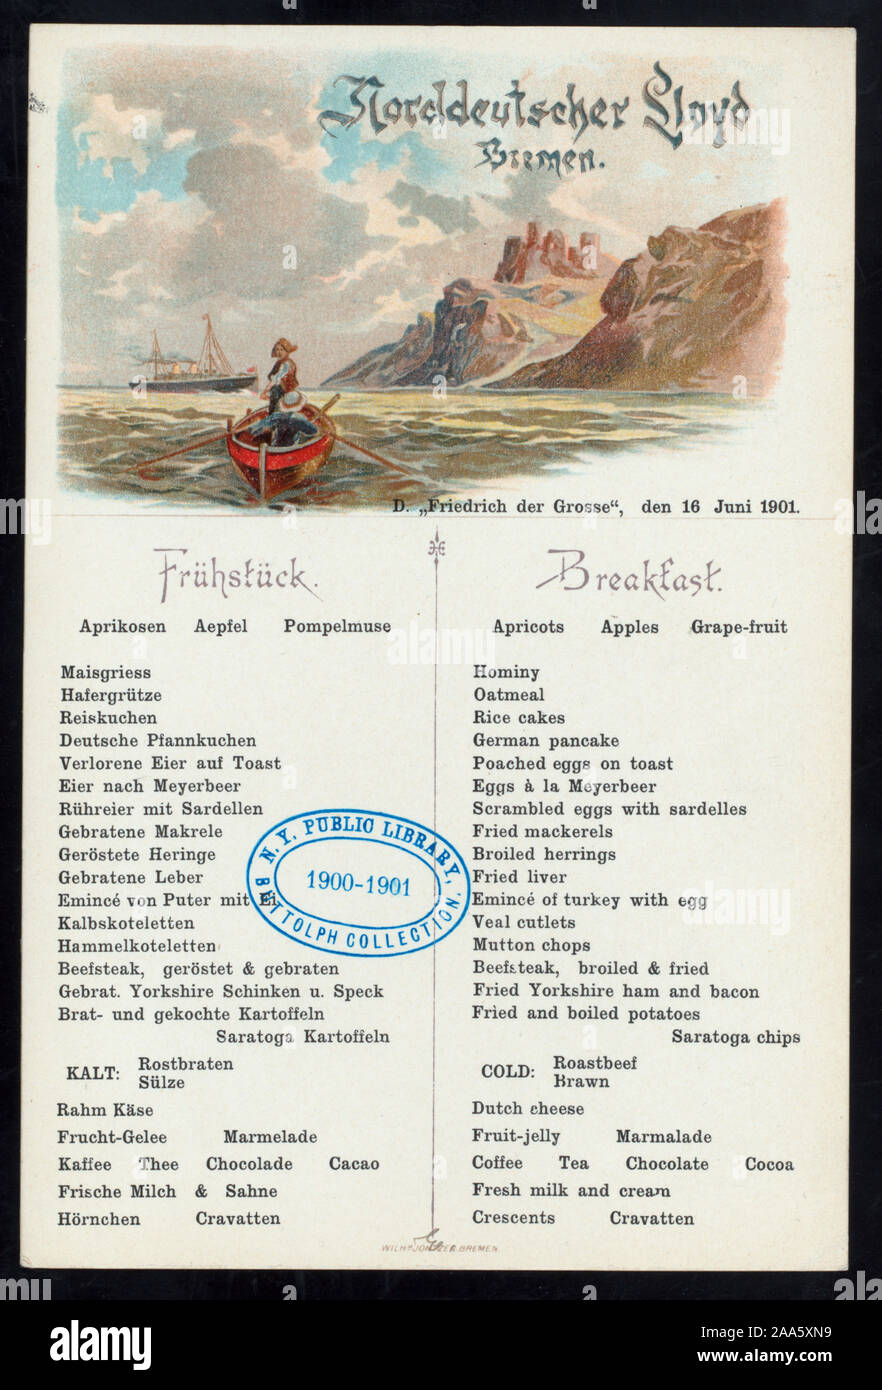 GERMAN & ENGLISH; ILLUSTRATION OF HARBOR SCENE, ROCKY SHORELINE; CARD ALSO A POSTCARD; Citation/Reference: 1901-1668; BREAKFAST [held by] NORDDEUTSCHERRR LLOYD BREMEN [at] SS FRIEDRICH DER GROSSE (SS;) Stock Photo